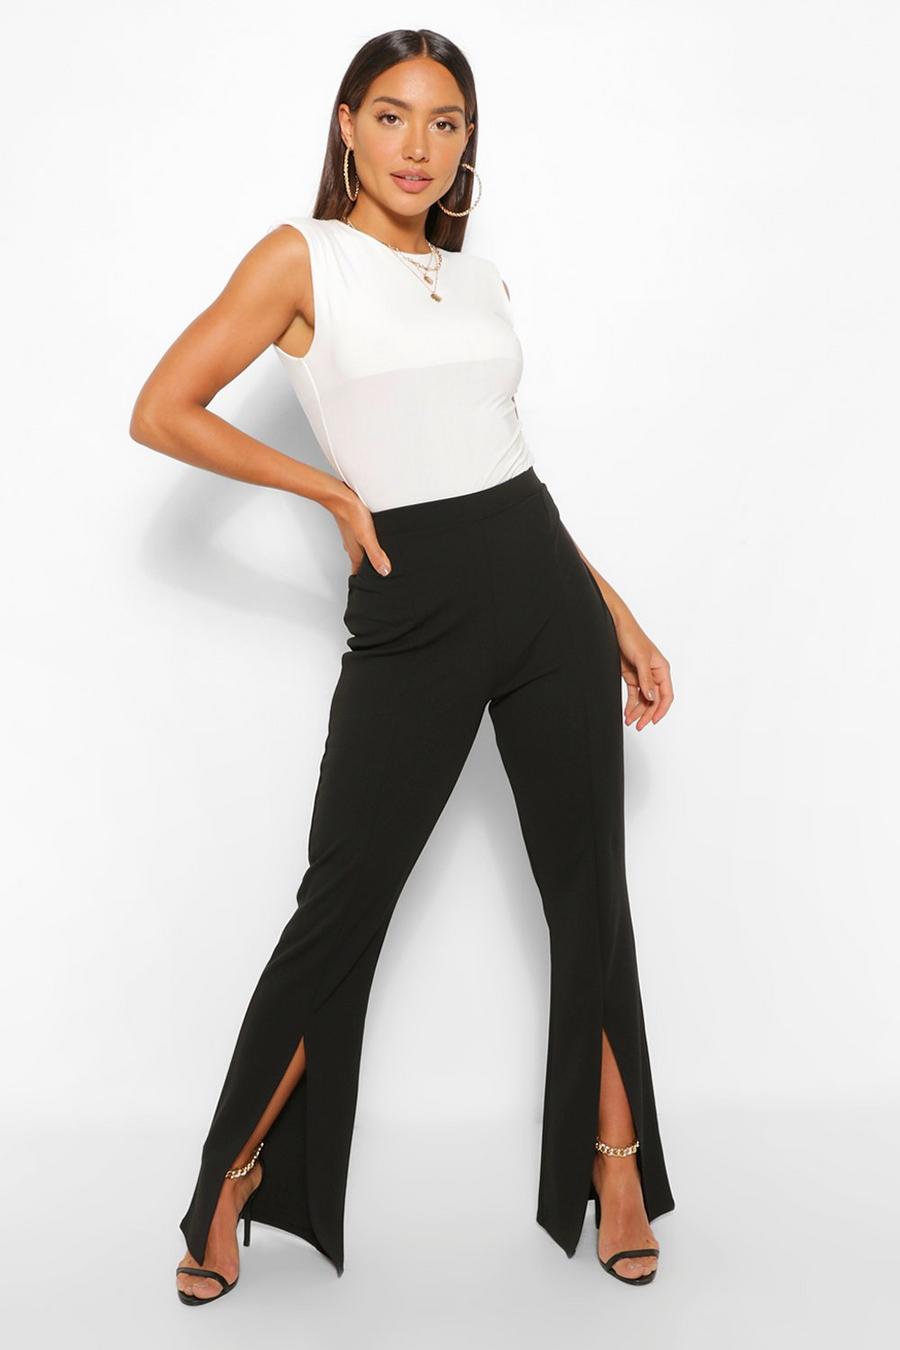 Women's Black Flare Pants Fashion Slim Straight Long Trousers